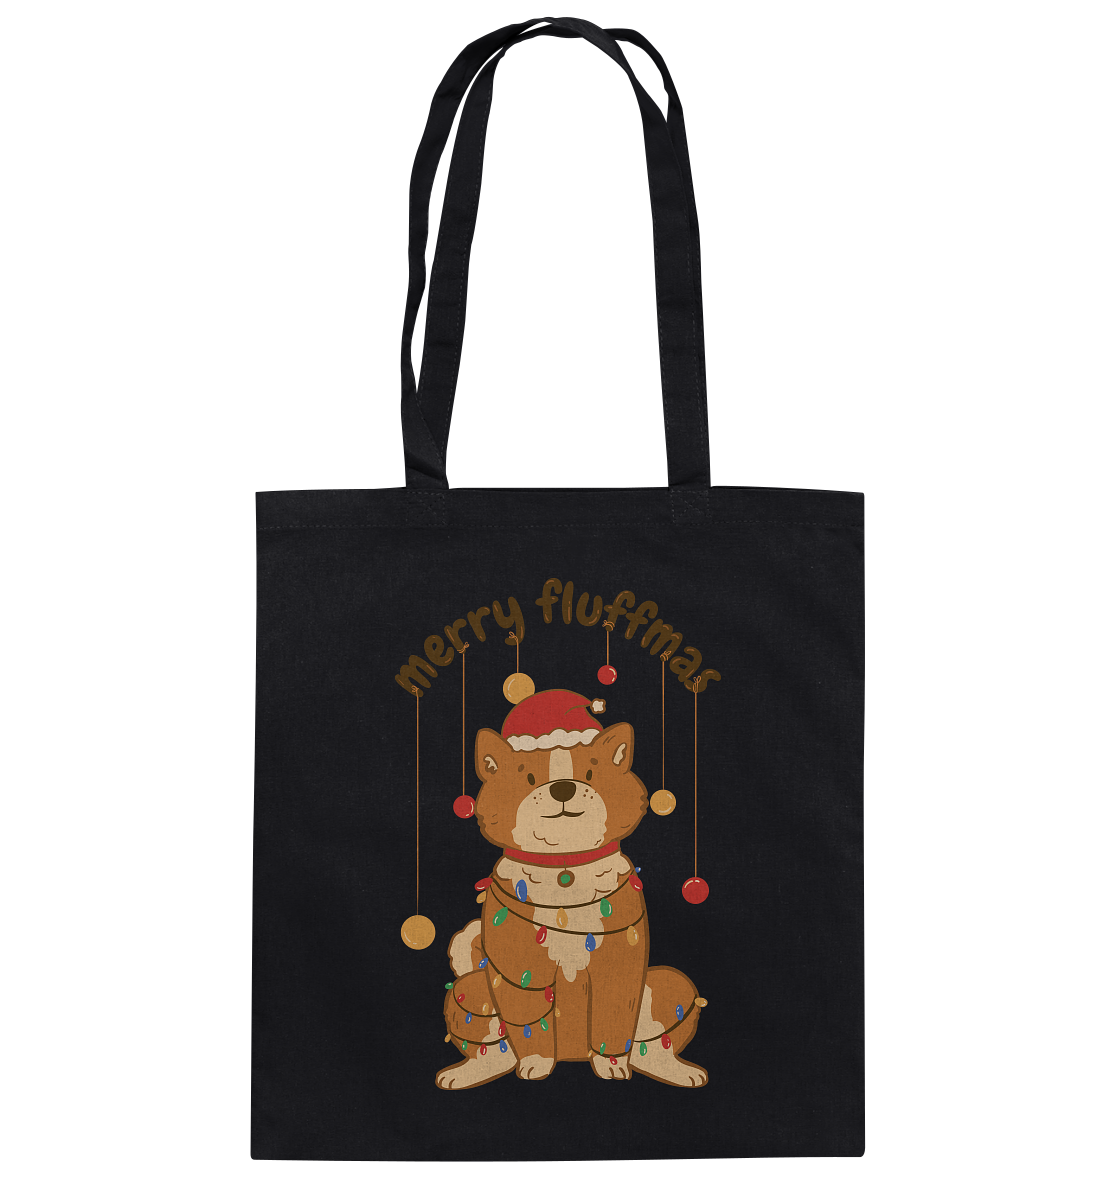 Christmas motif Fun Merry Fluffmas - cotton bag